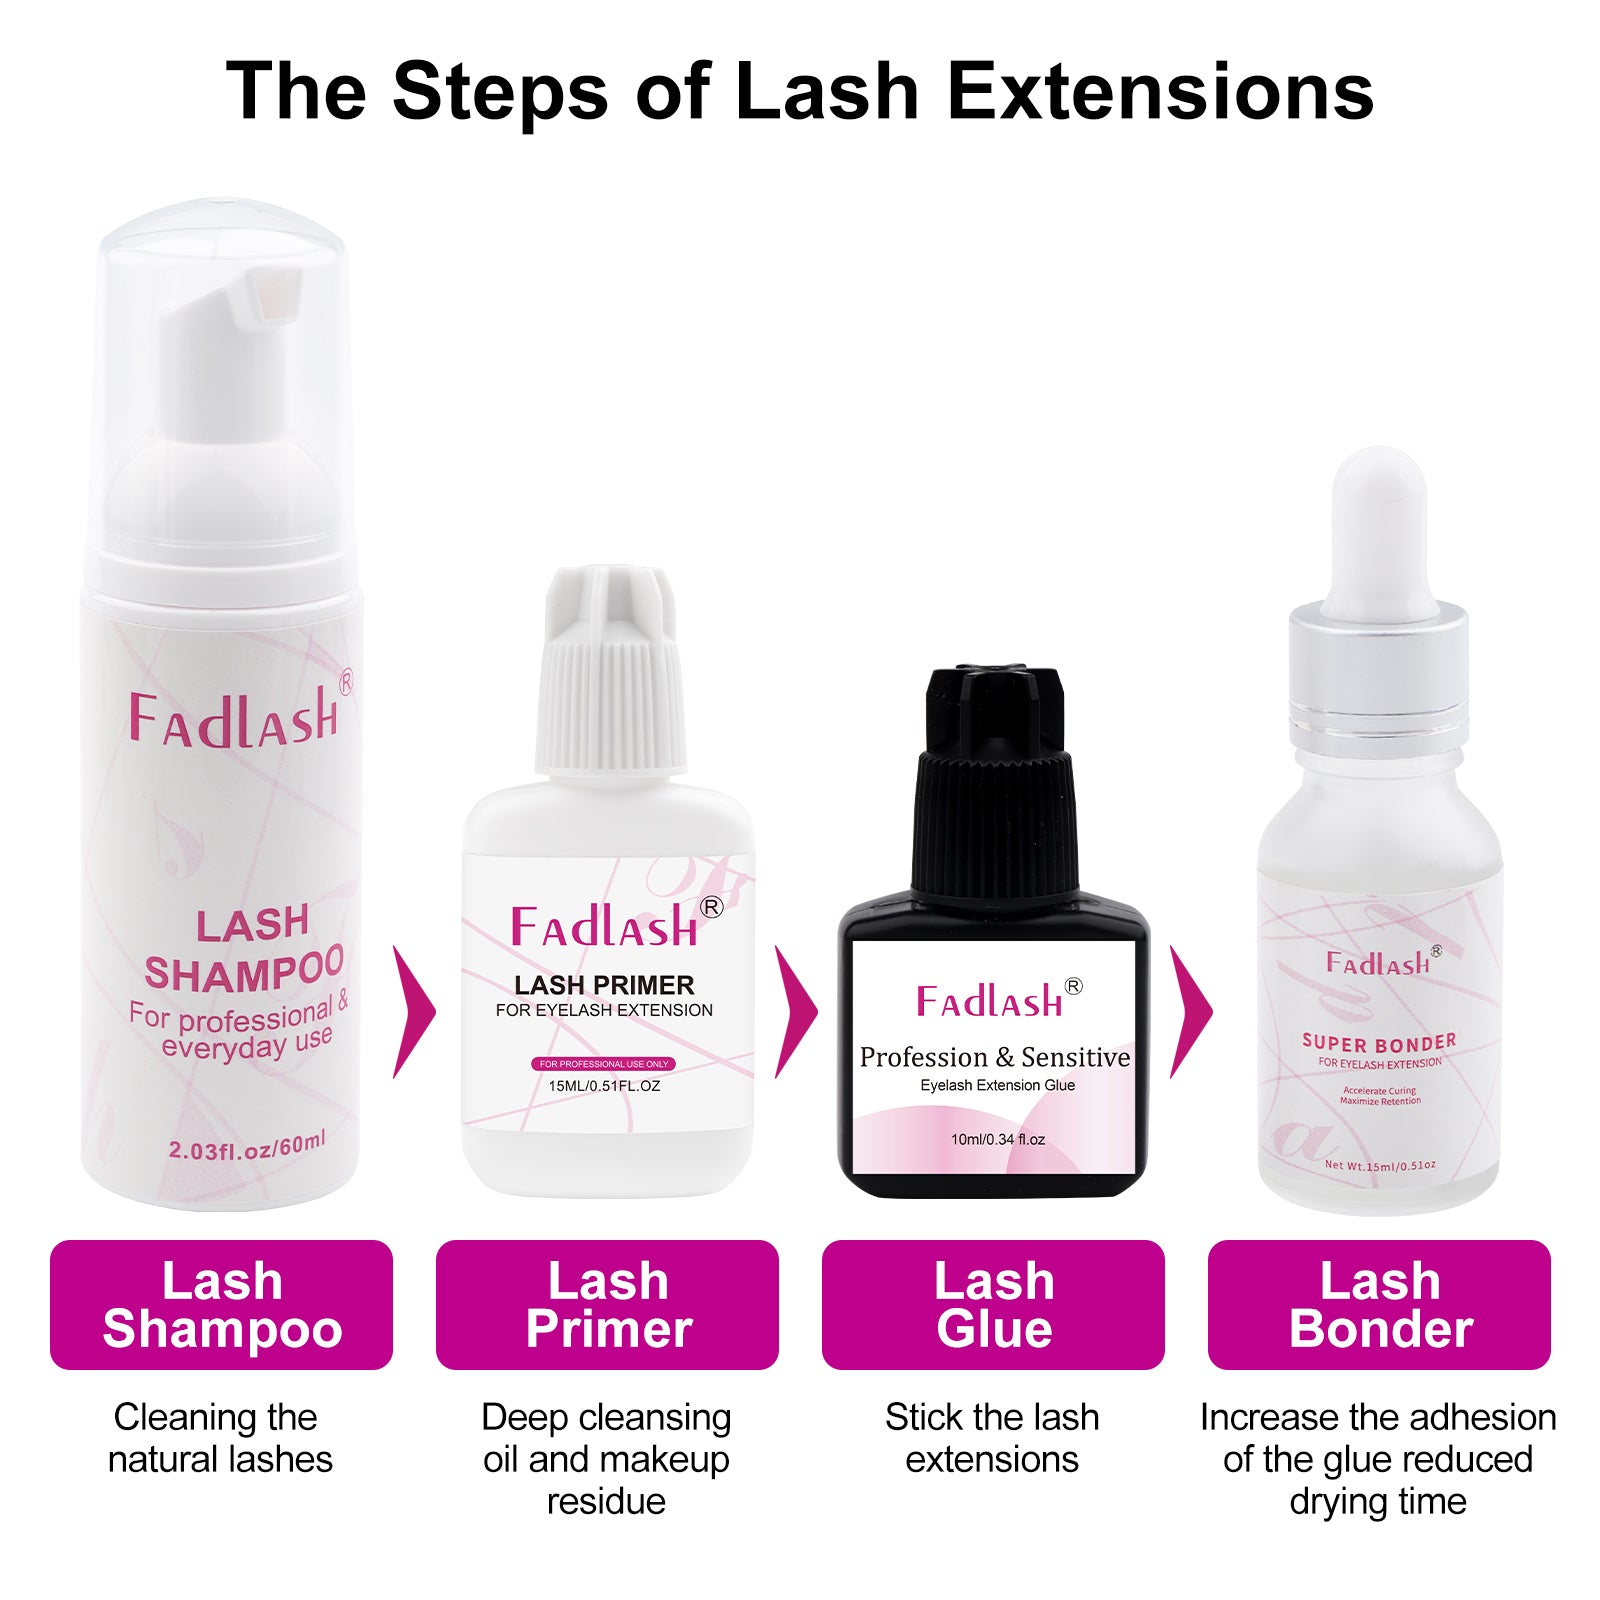 Eyelash Extensions Primer - Fadlash